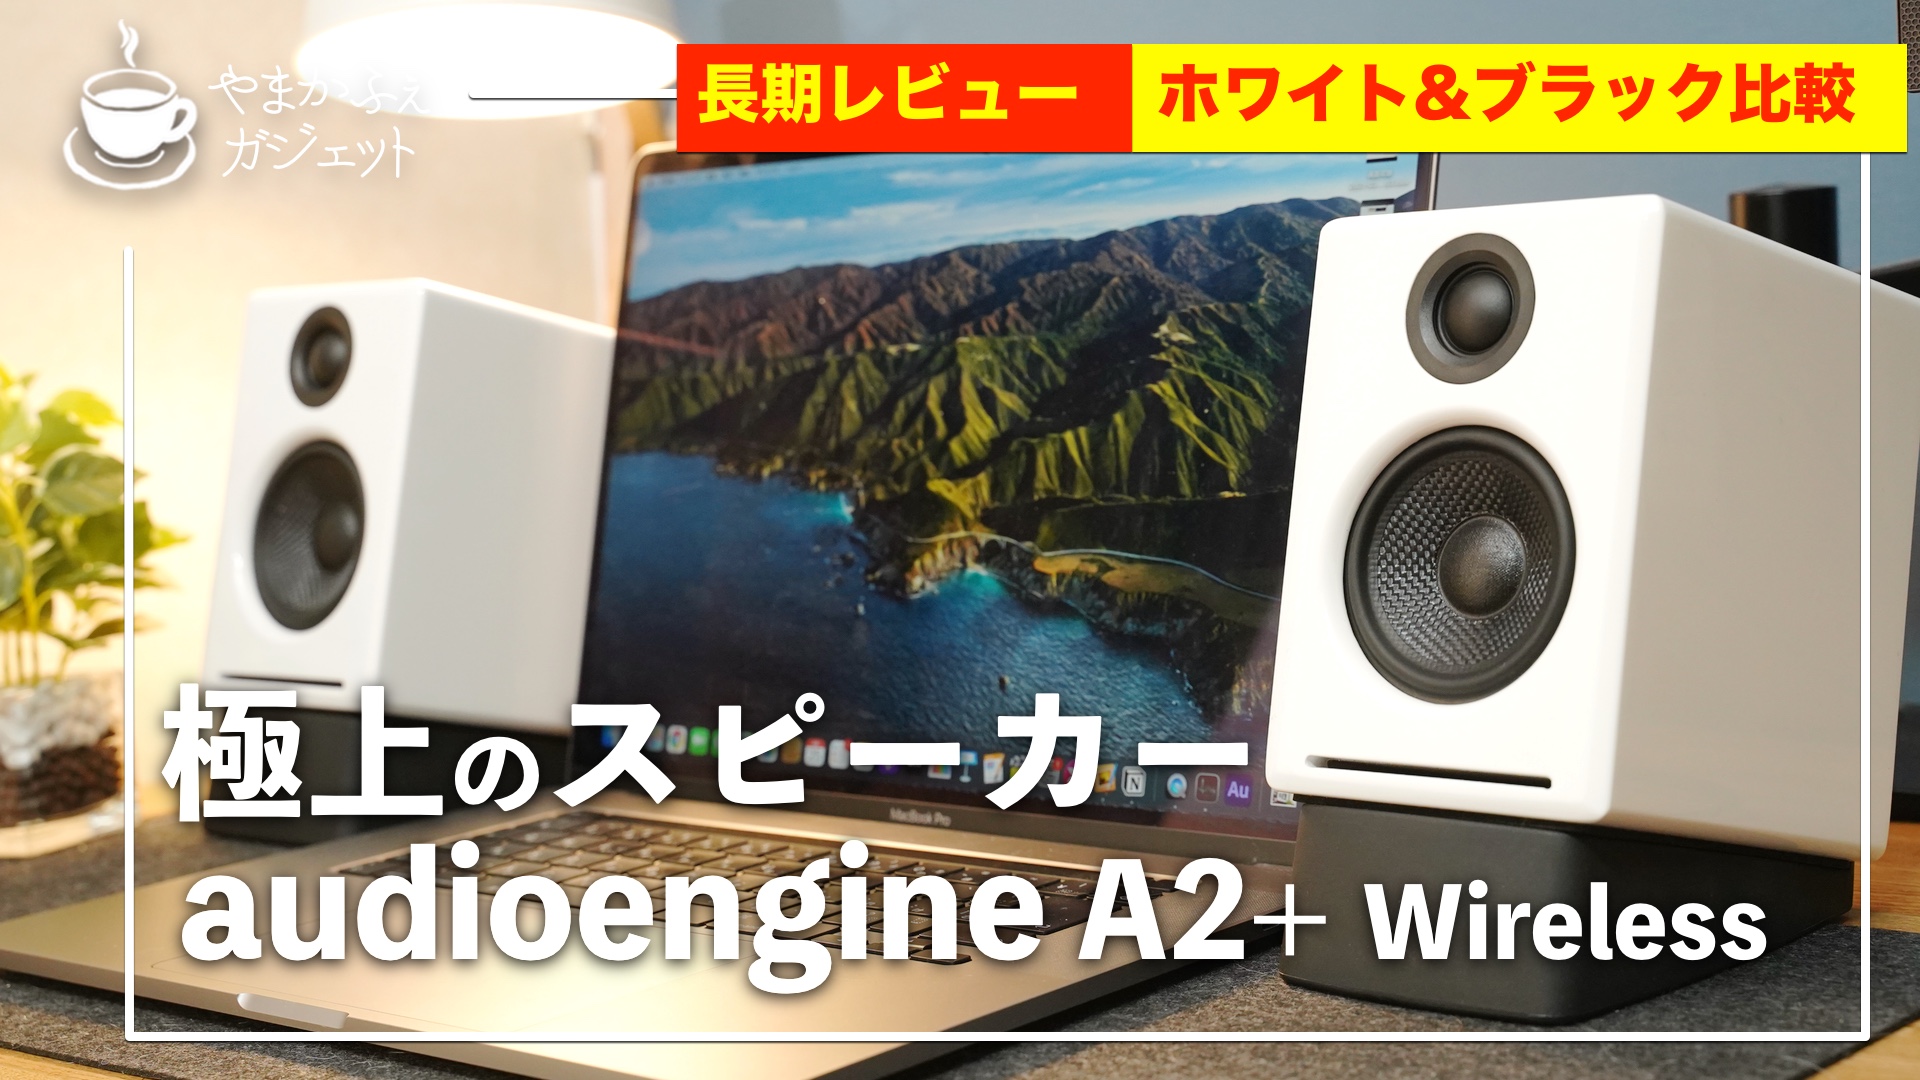 audioengine A2+ SATIN BLACK 純正スタンド付 property-madagascar.com